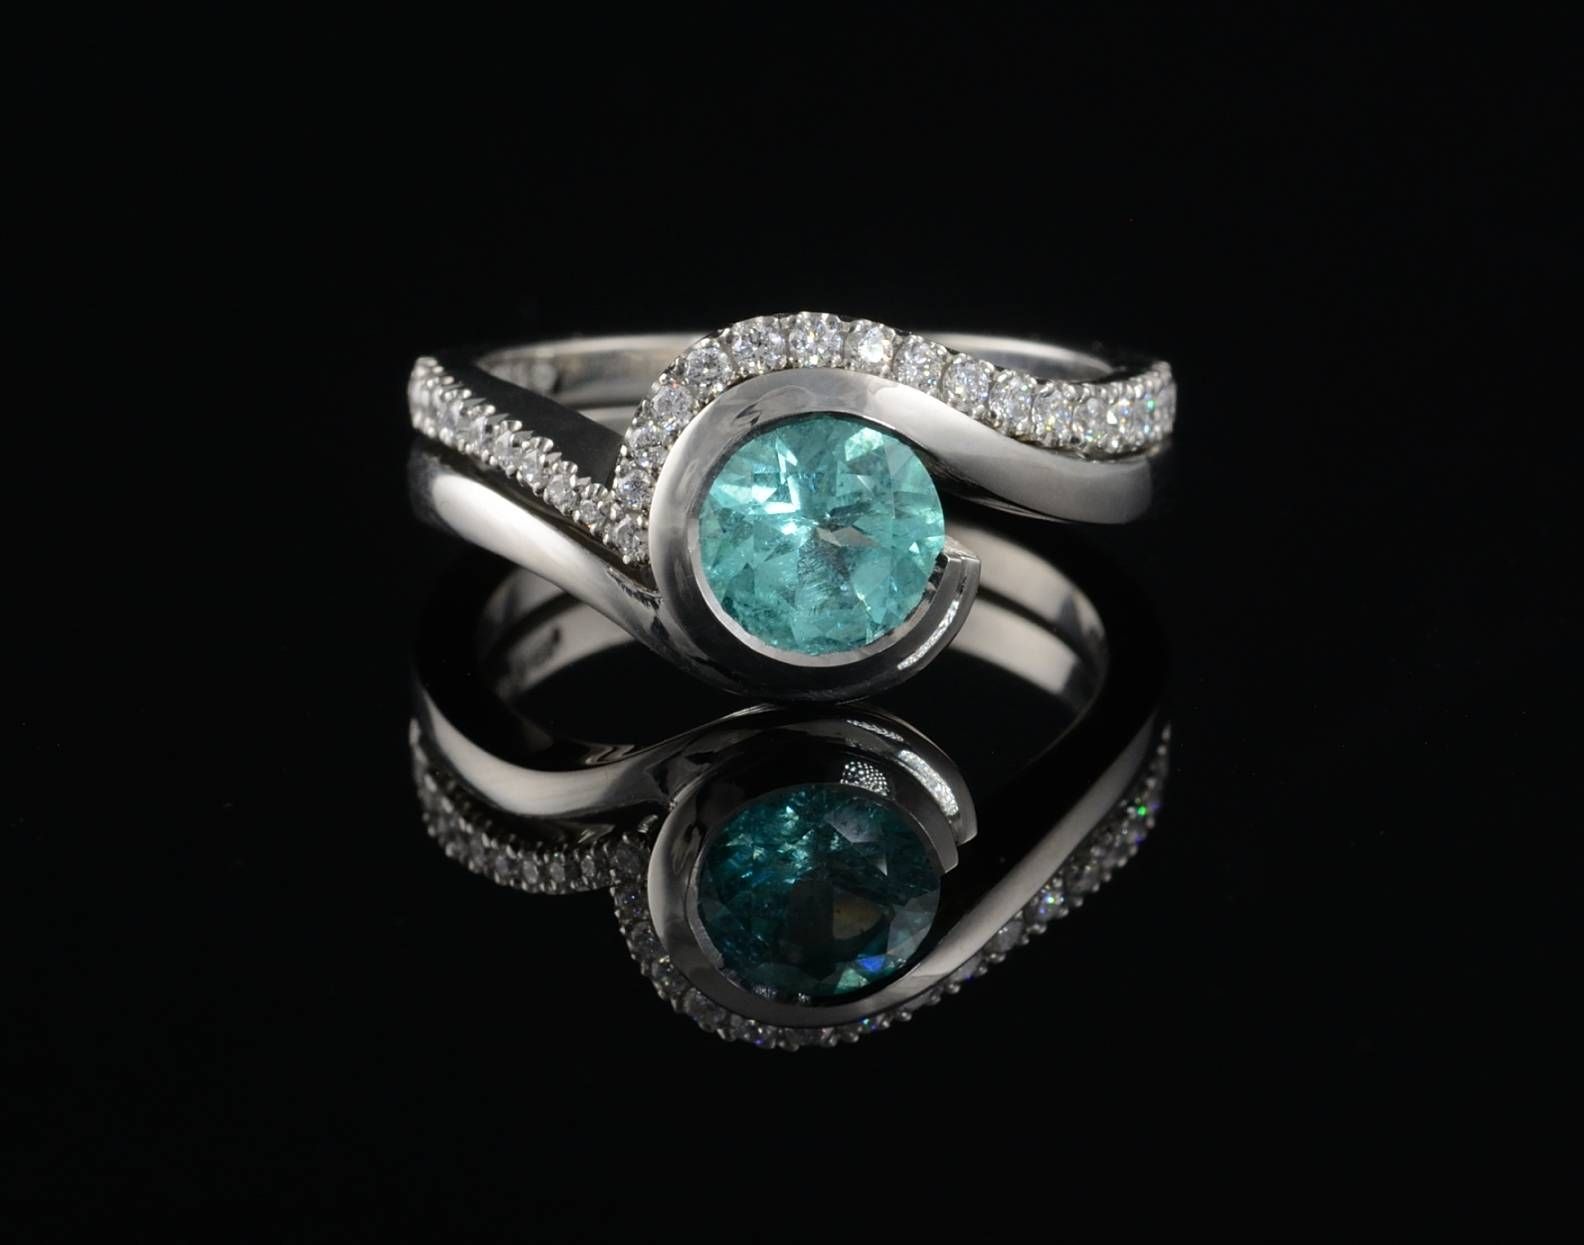 Unusual Wedding Rings For Totally Memorable Moment In Your In Unusual Wedding Rings Designs (View 10 of 15)